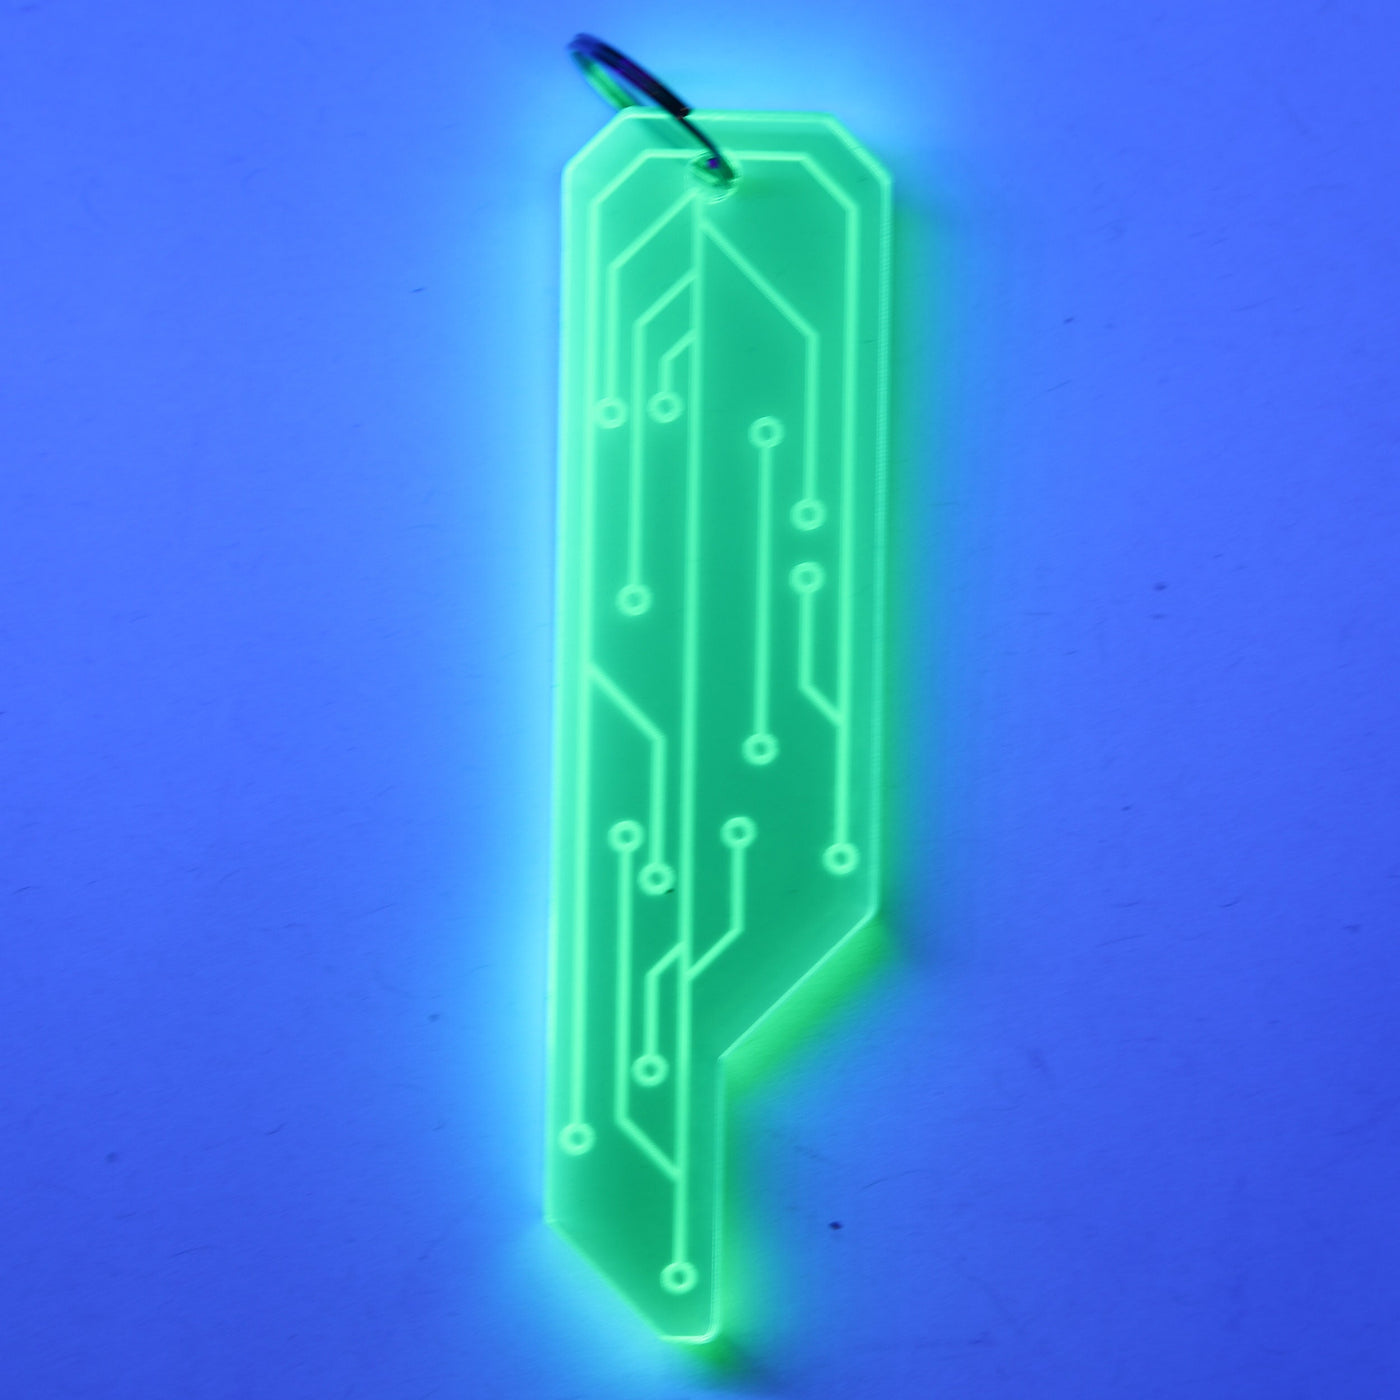 CyberPunk Black light Glow Pendant - Cyberpunk UV Reactive Pendant - Cyber Punk Keychain - Jones Creativity